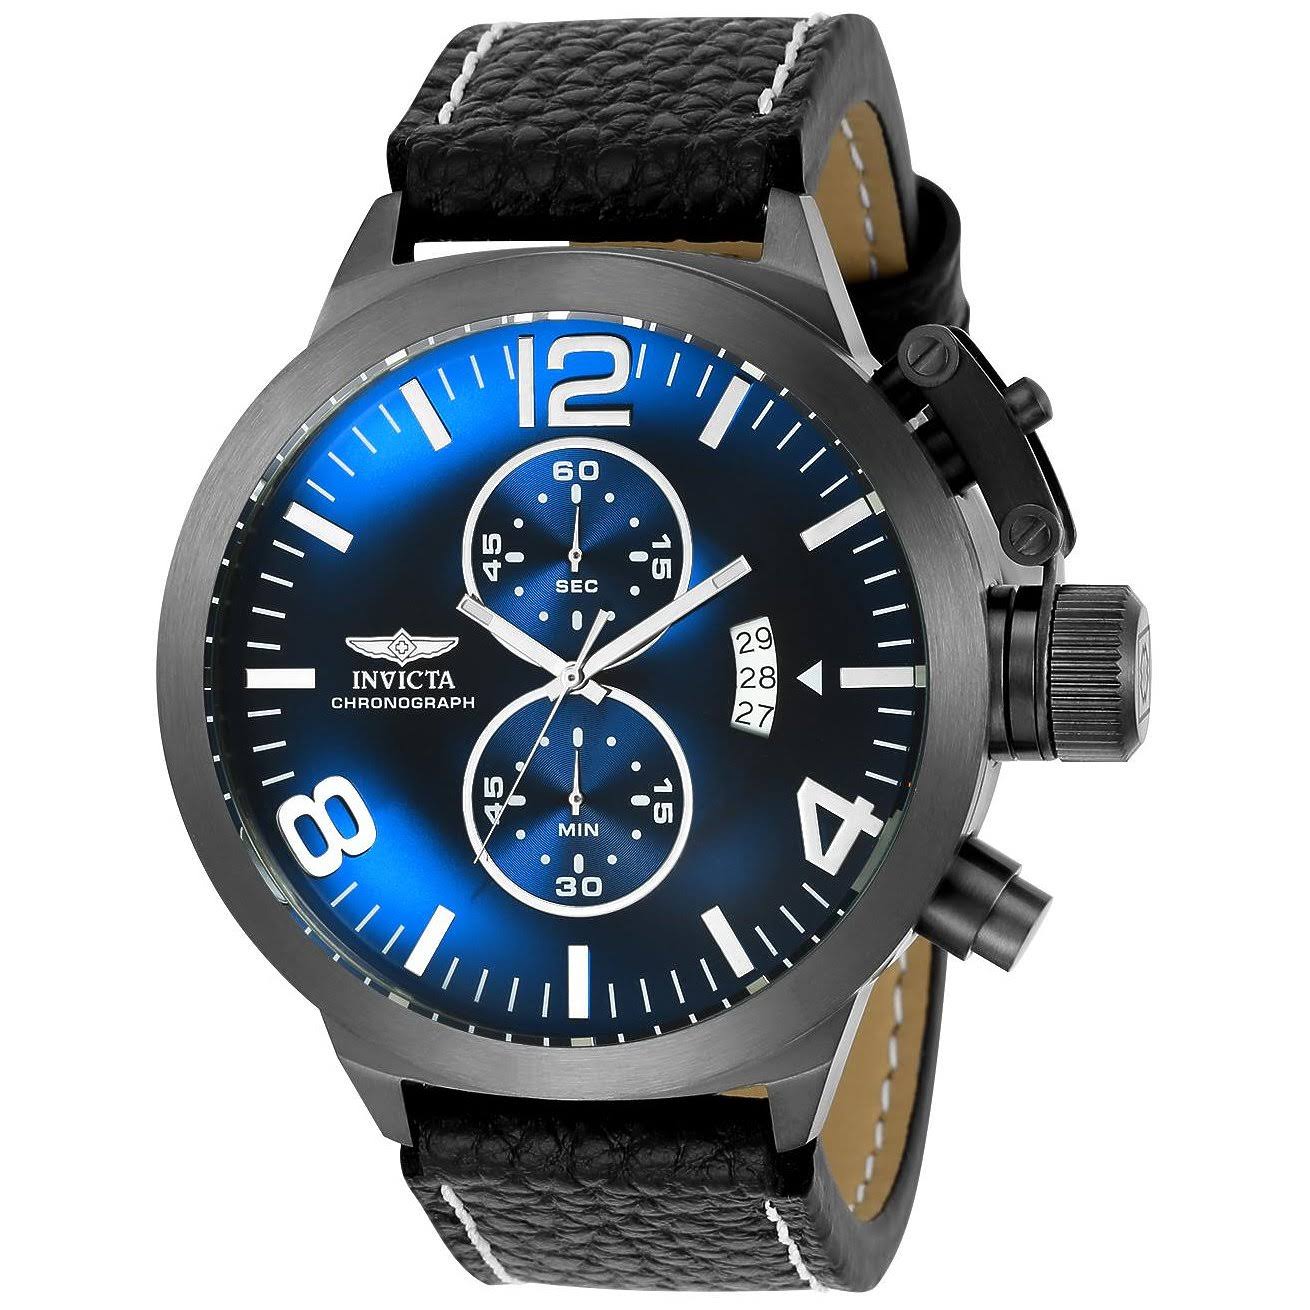 Invicta Men's 'Corduba' Quartz Stainless Steel and Leather Casual Watch, Color:Black (Model: 23687)